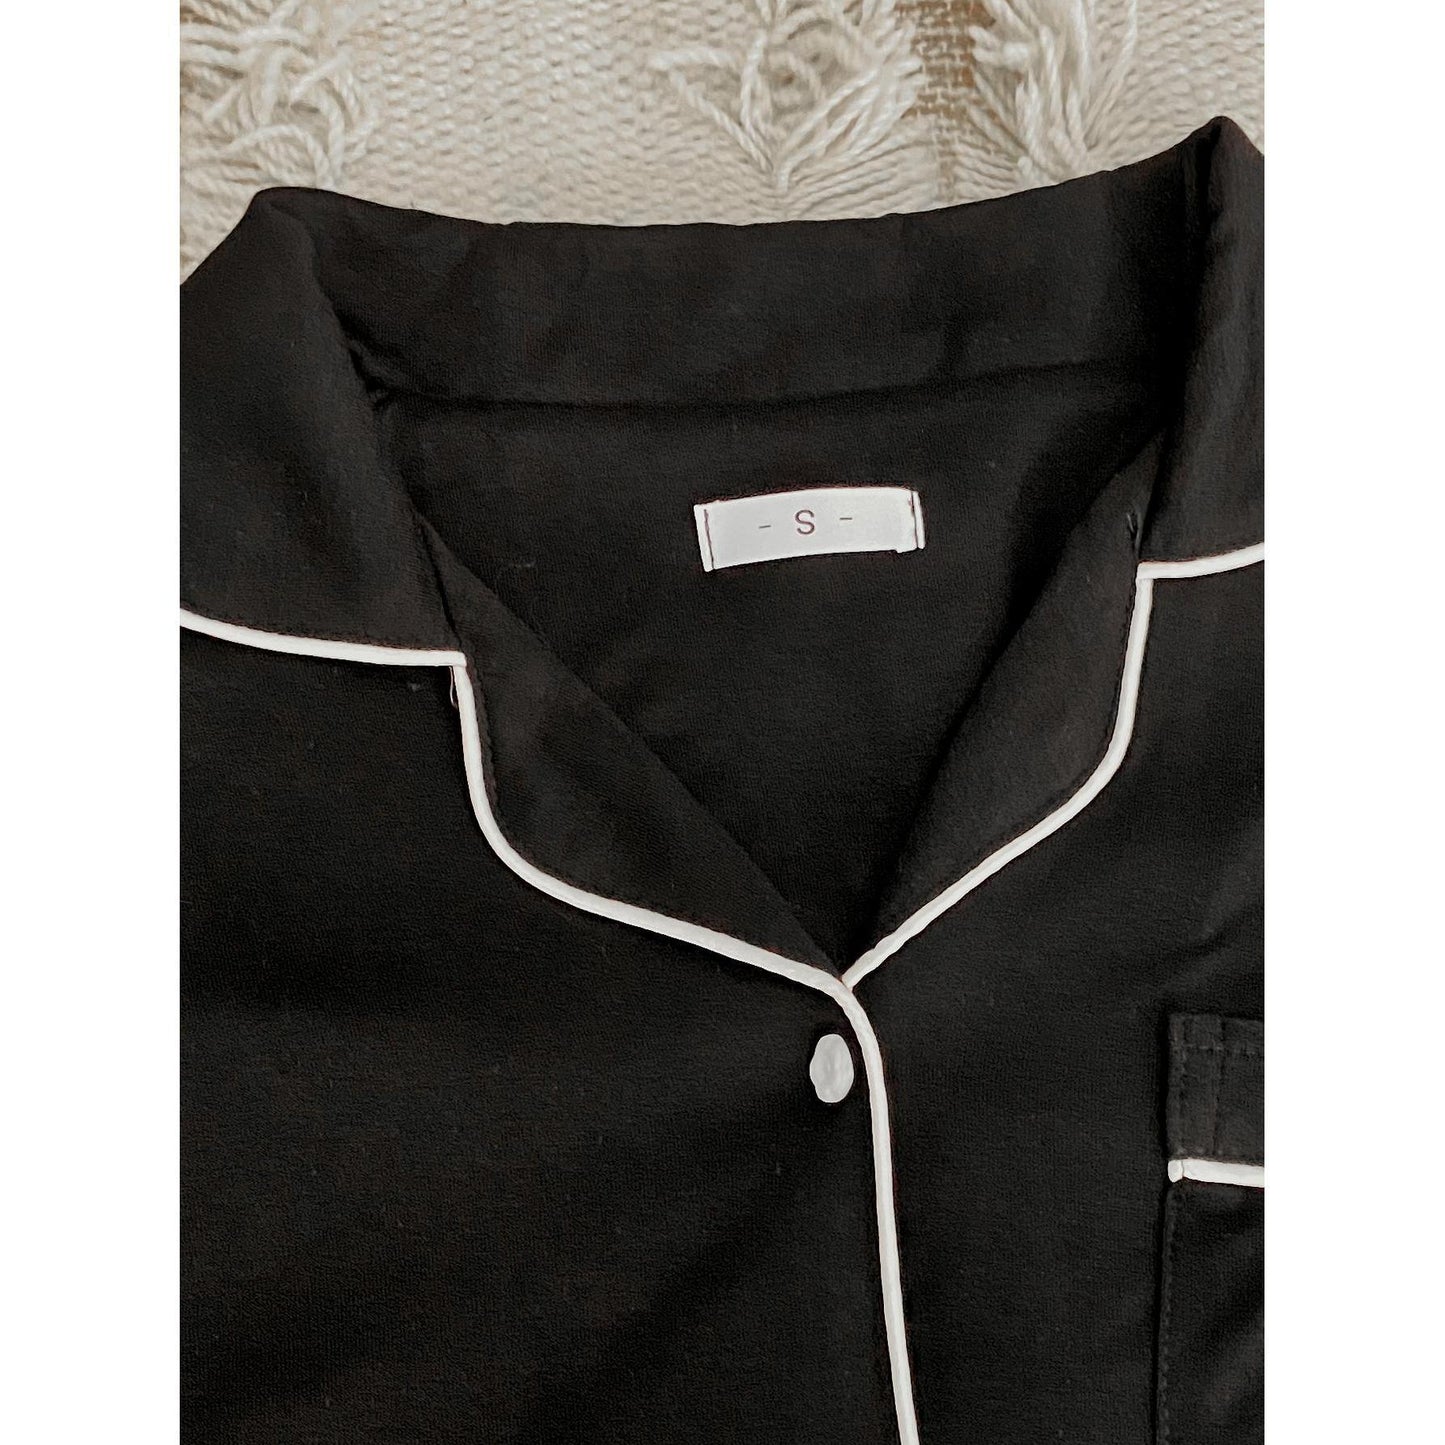 Homewear Suit Cardigan Collared Short-Sleeved Shirt Shorts Pajamas